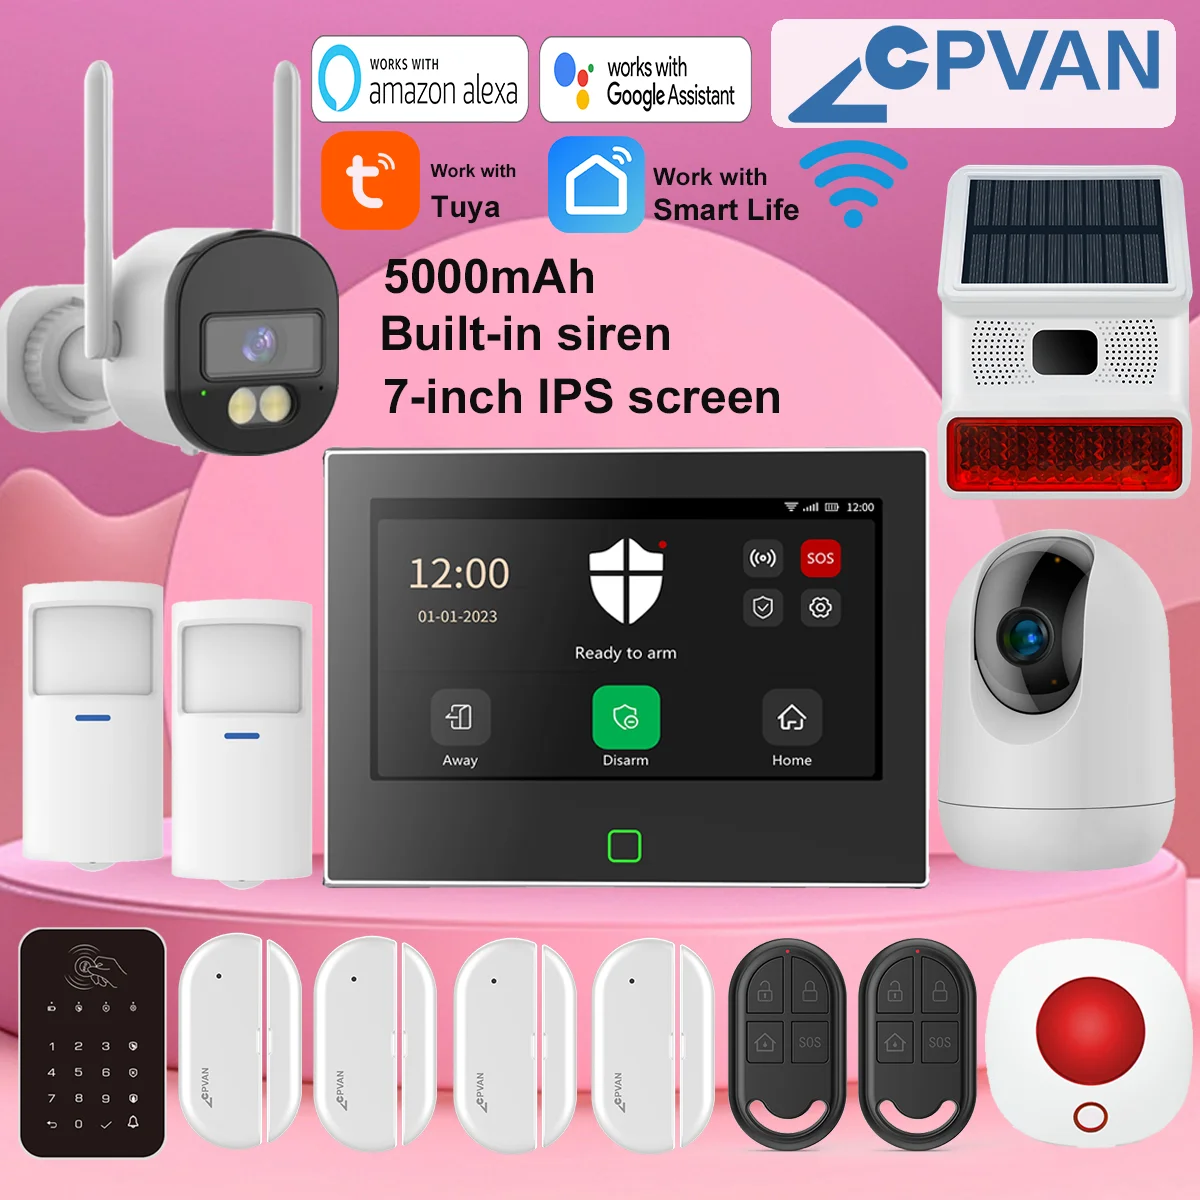 

CPVAN Wireless WiFi Tuya Smart Home Alarm System Home burglar Security Protection Alarm DIY kit Alarm built-in 5000mAh Battery